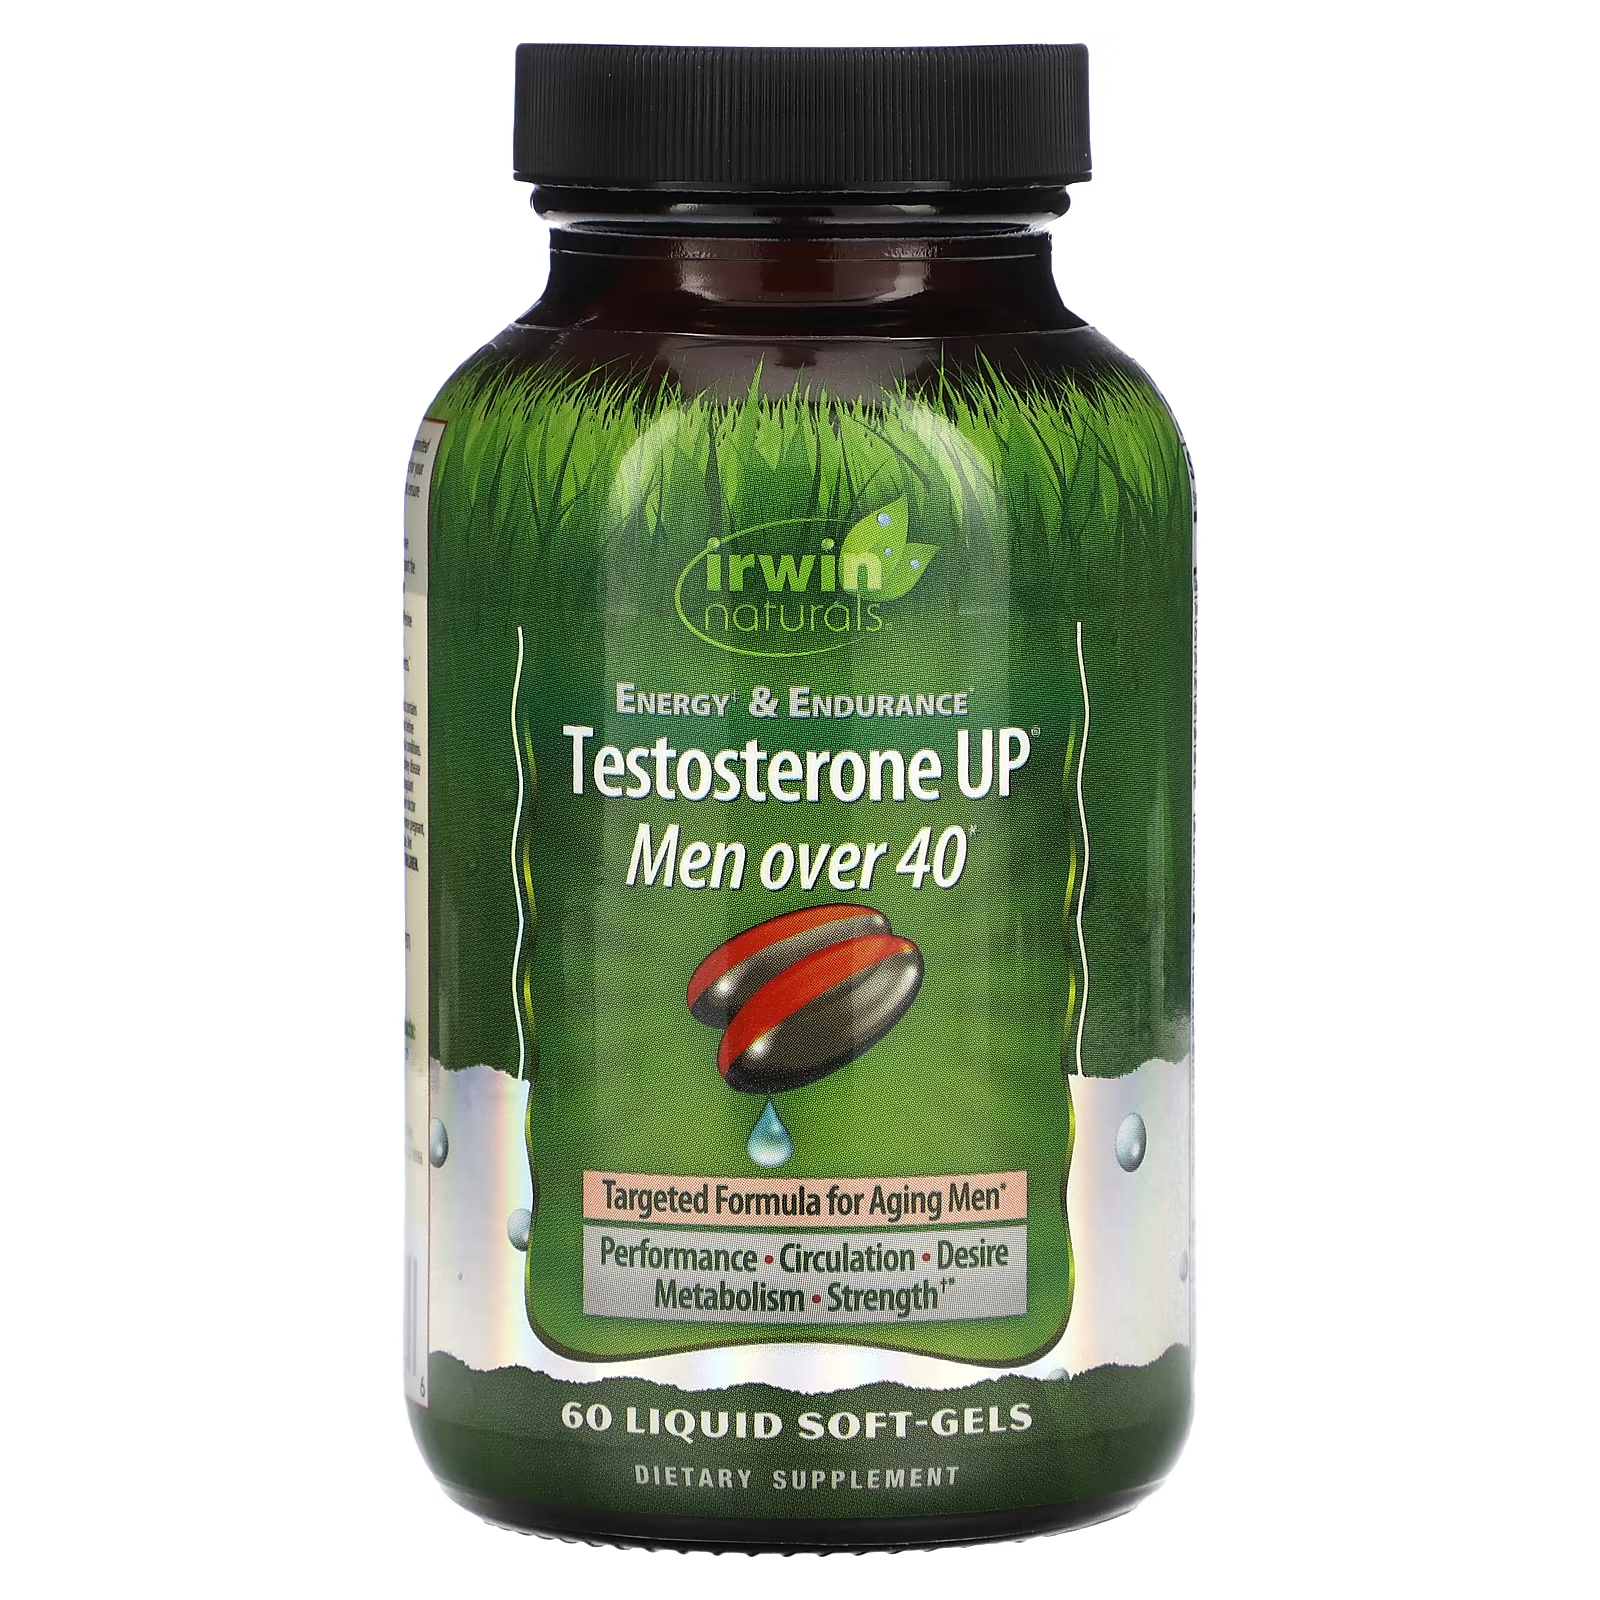 Пищевая добавка Irwin Naturals Testosterone UP для мужчин старше 40 лет, 60 жидких таблеток пищевая добавка irwin naturals testosterone up strength